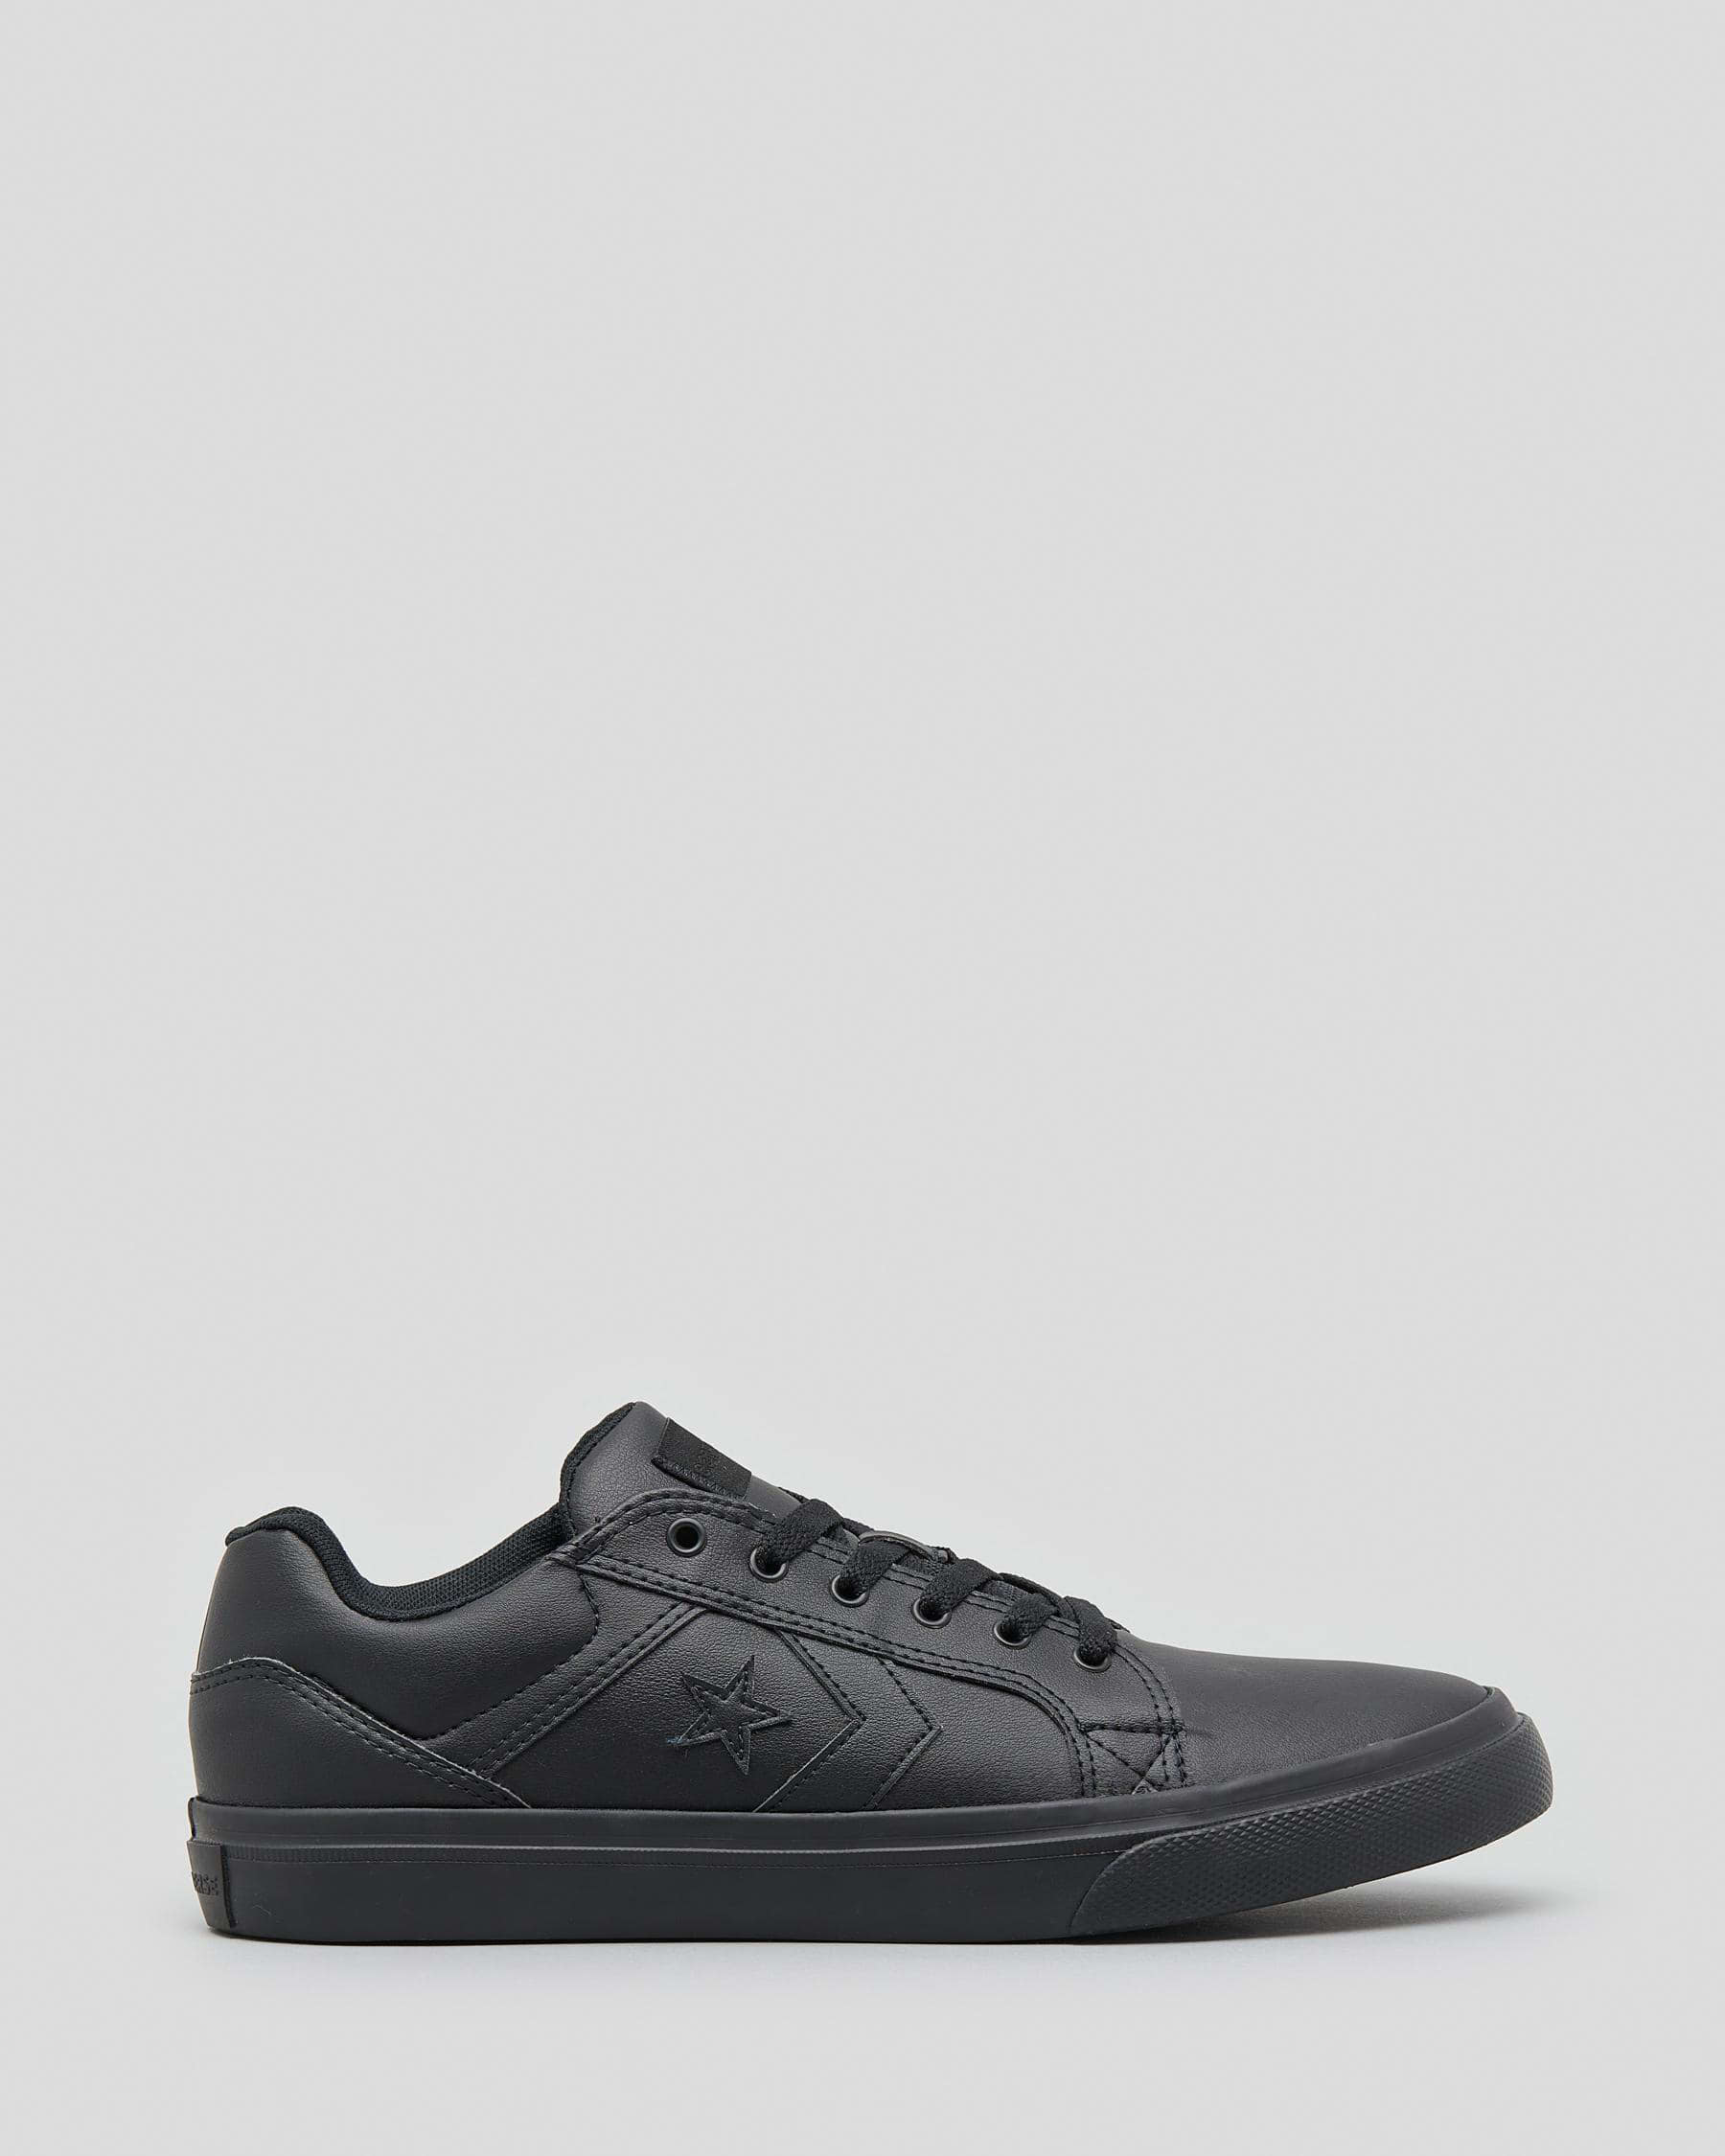 Converse El Distrito 2.0 Leather Shoes In Black/black/black - Fast ...